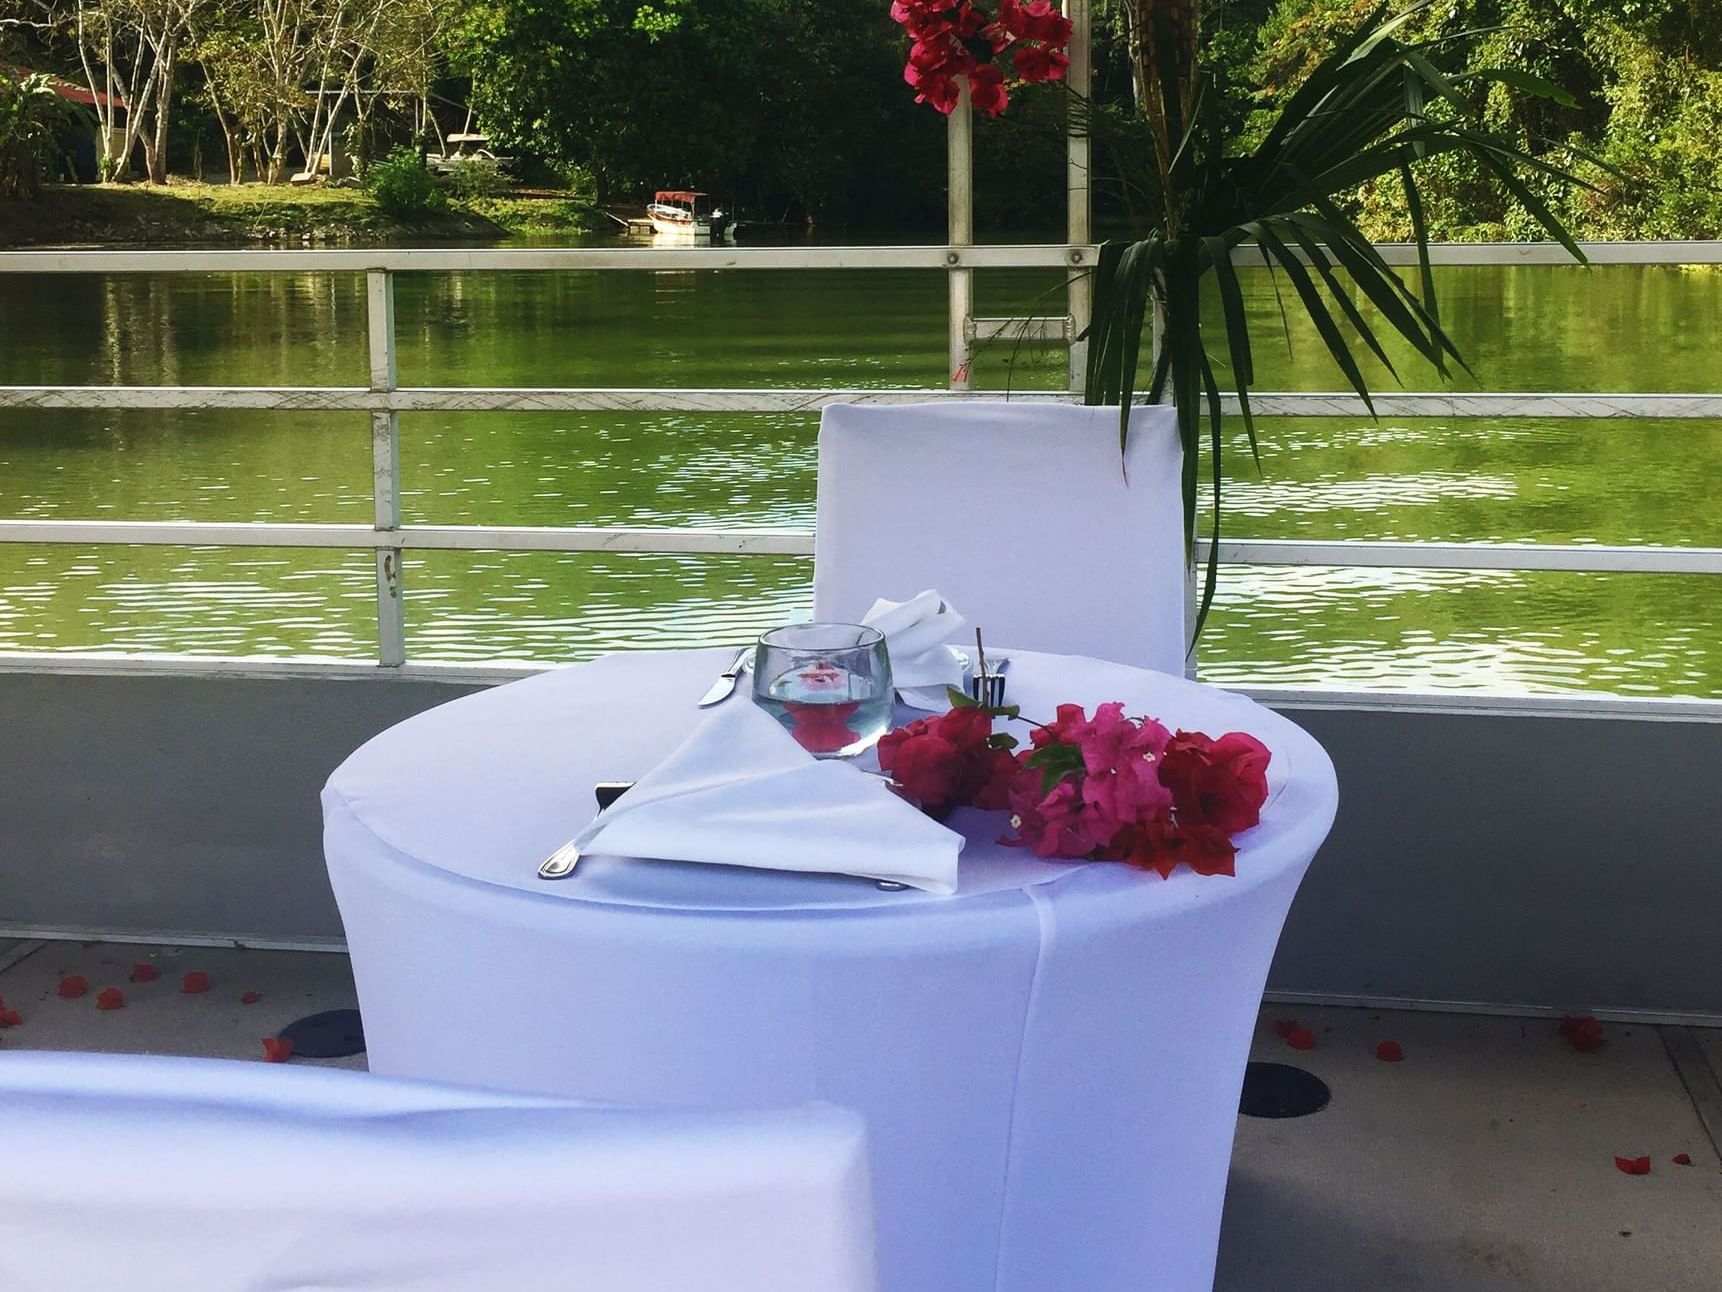 Lakeside dinner table with flowers at Gamboa Rainforest Resort